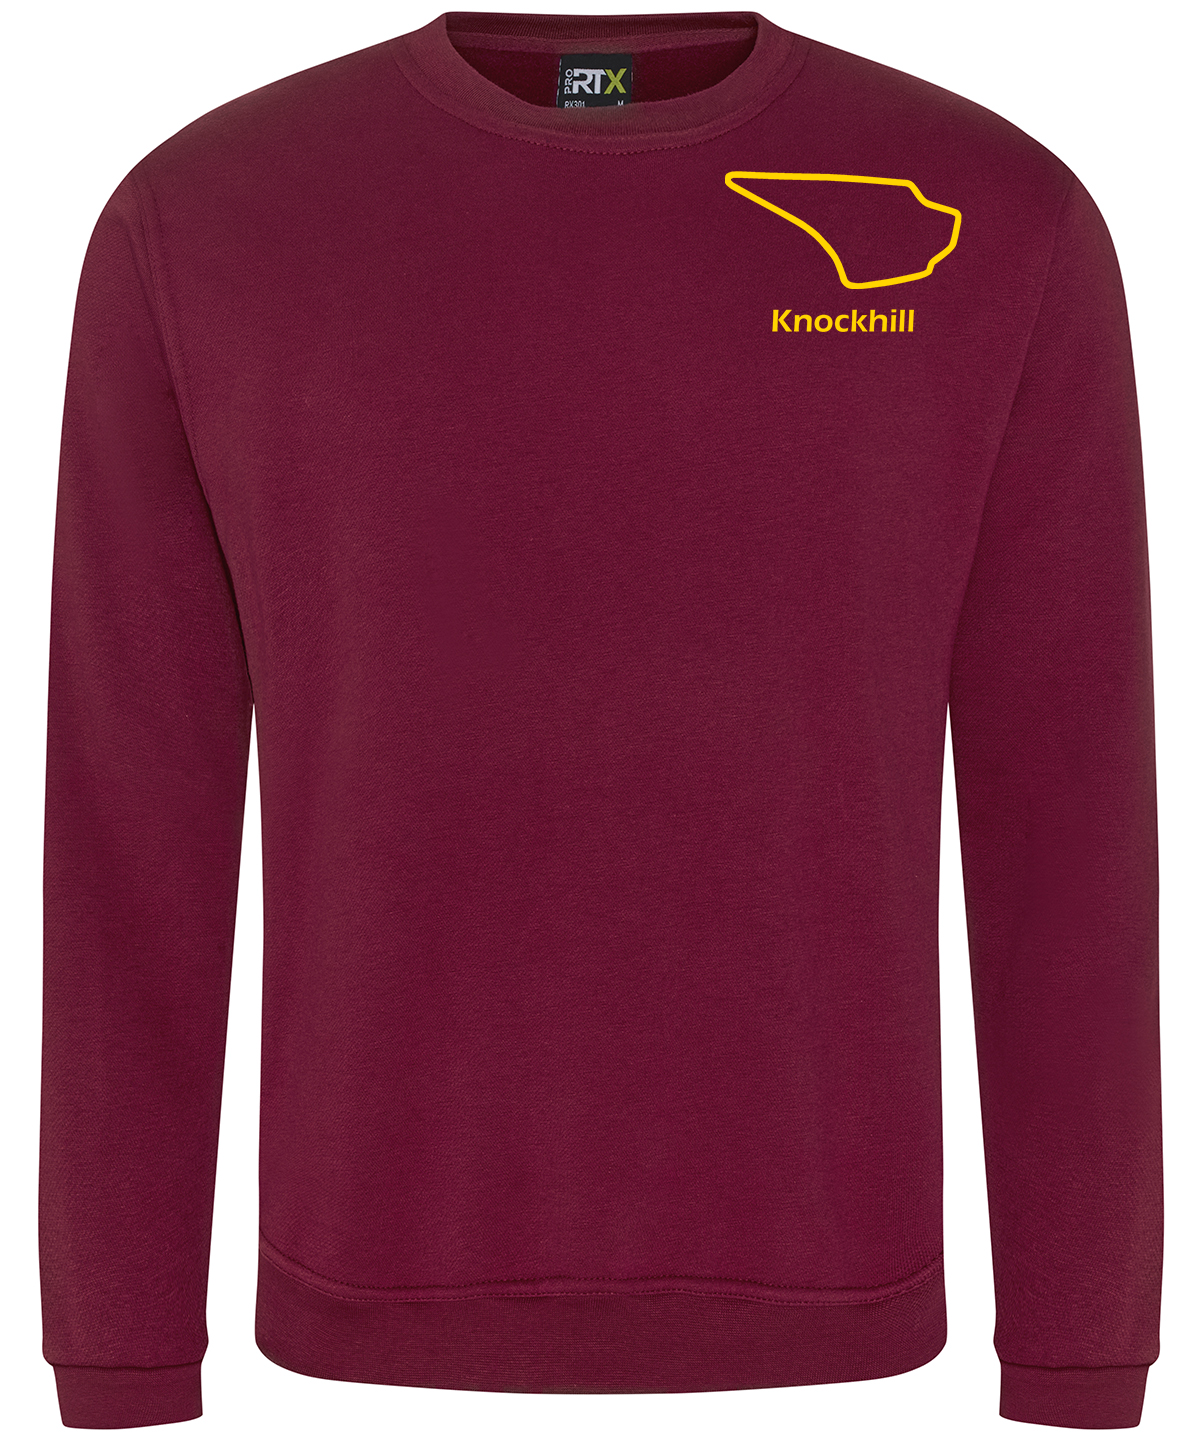 Knockhill Sweatshirt